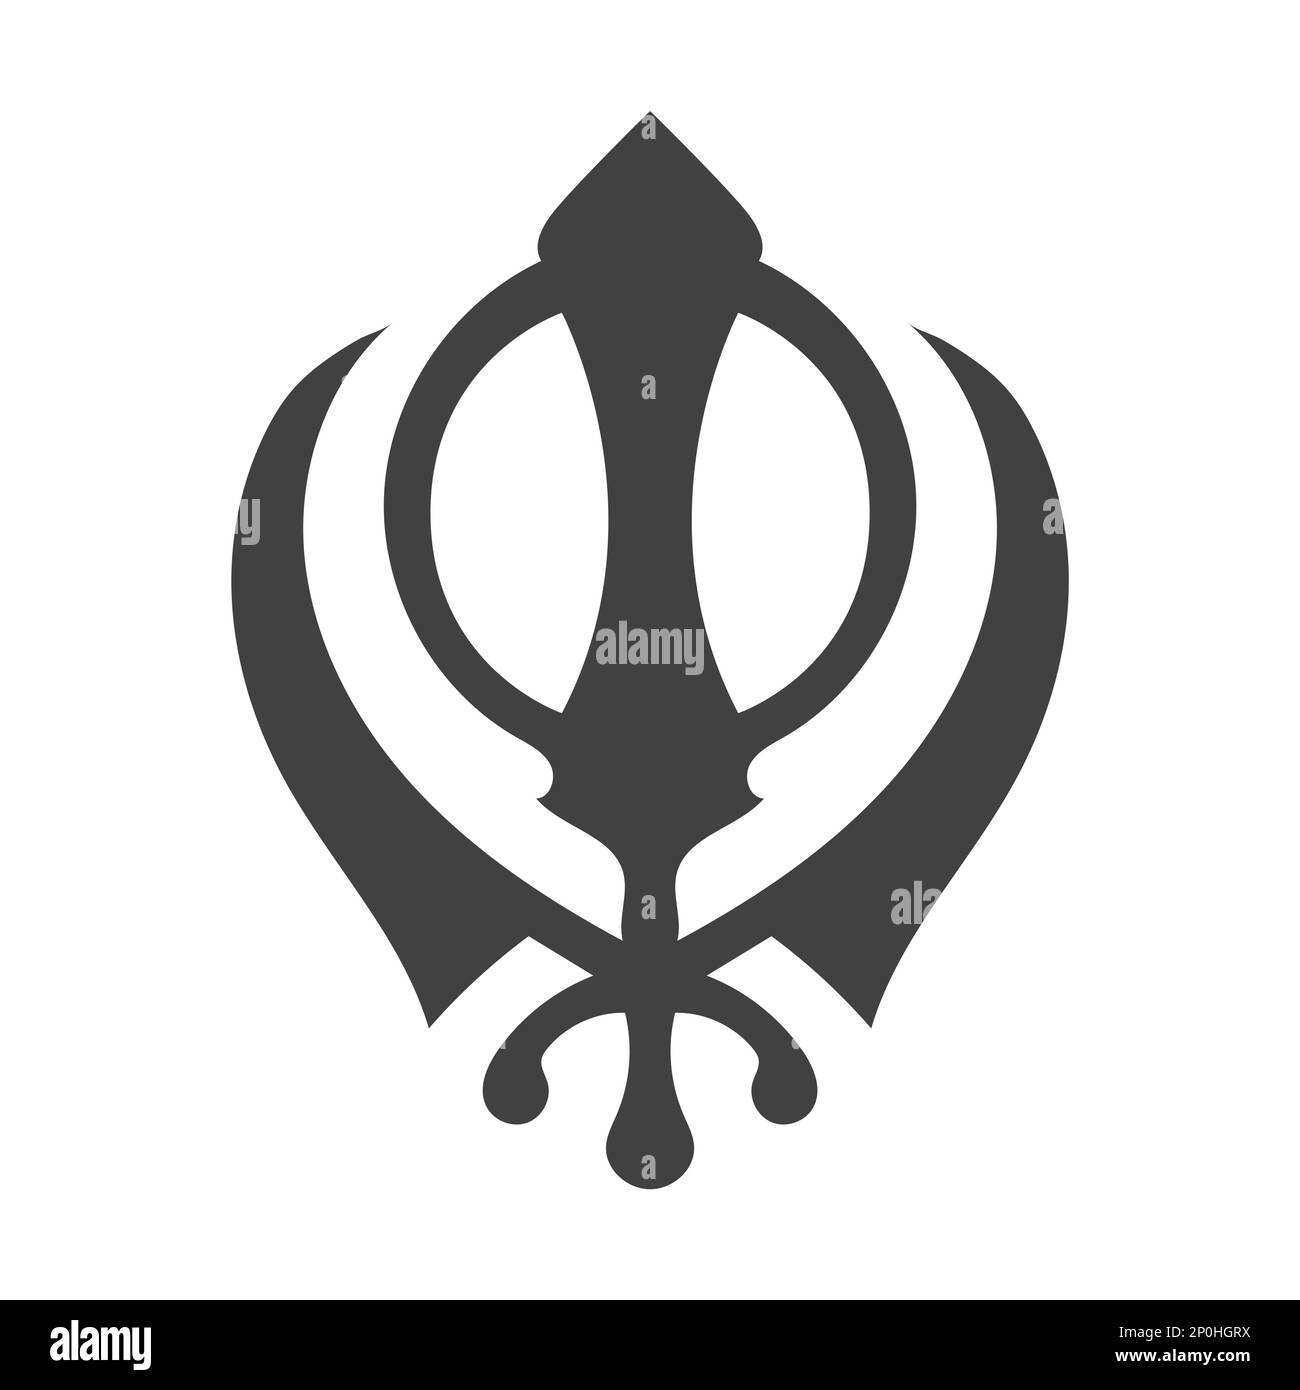 Sikhism Vector Religious Sign - Sikh dharma symbol - vector religious signs and symbols Stock Vector